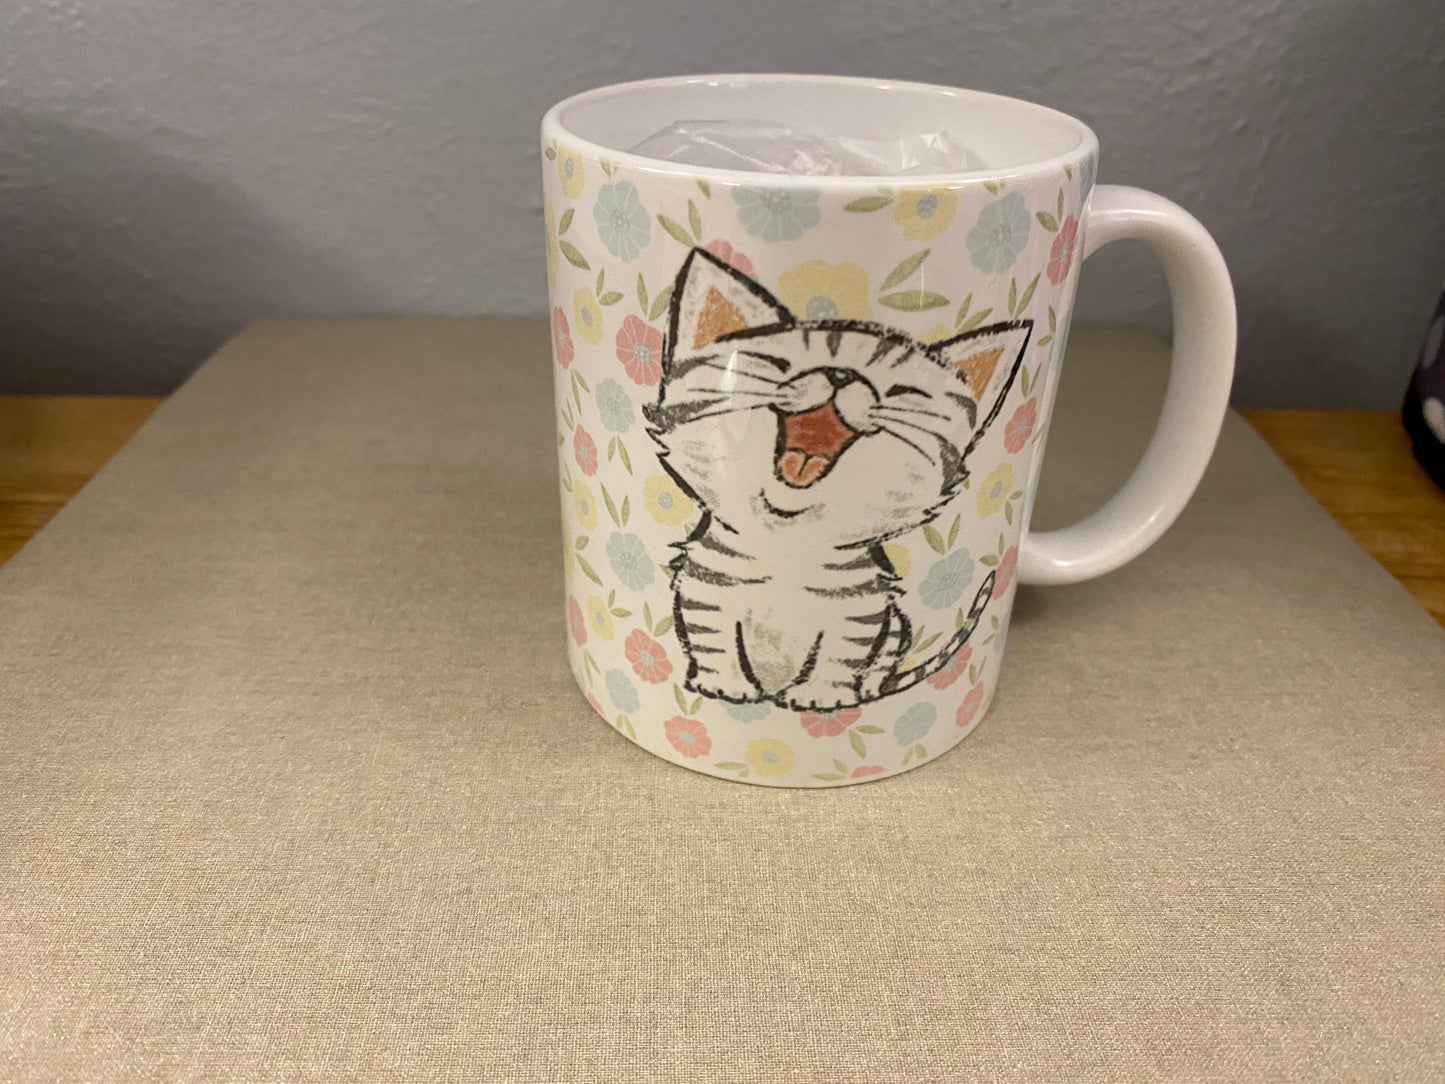 Flowers and Singing Cat mug, custom coffee mug, Cat Mug, coffee lovers mug, Grey Tabby Mug, custom mug, Tabby Cat Mug